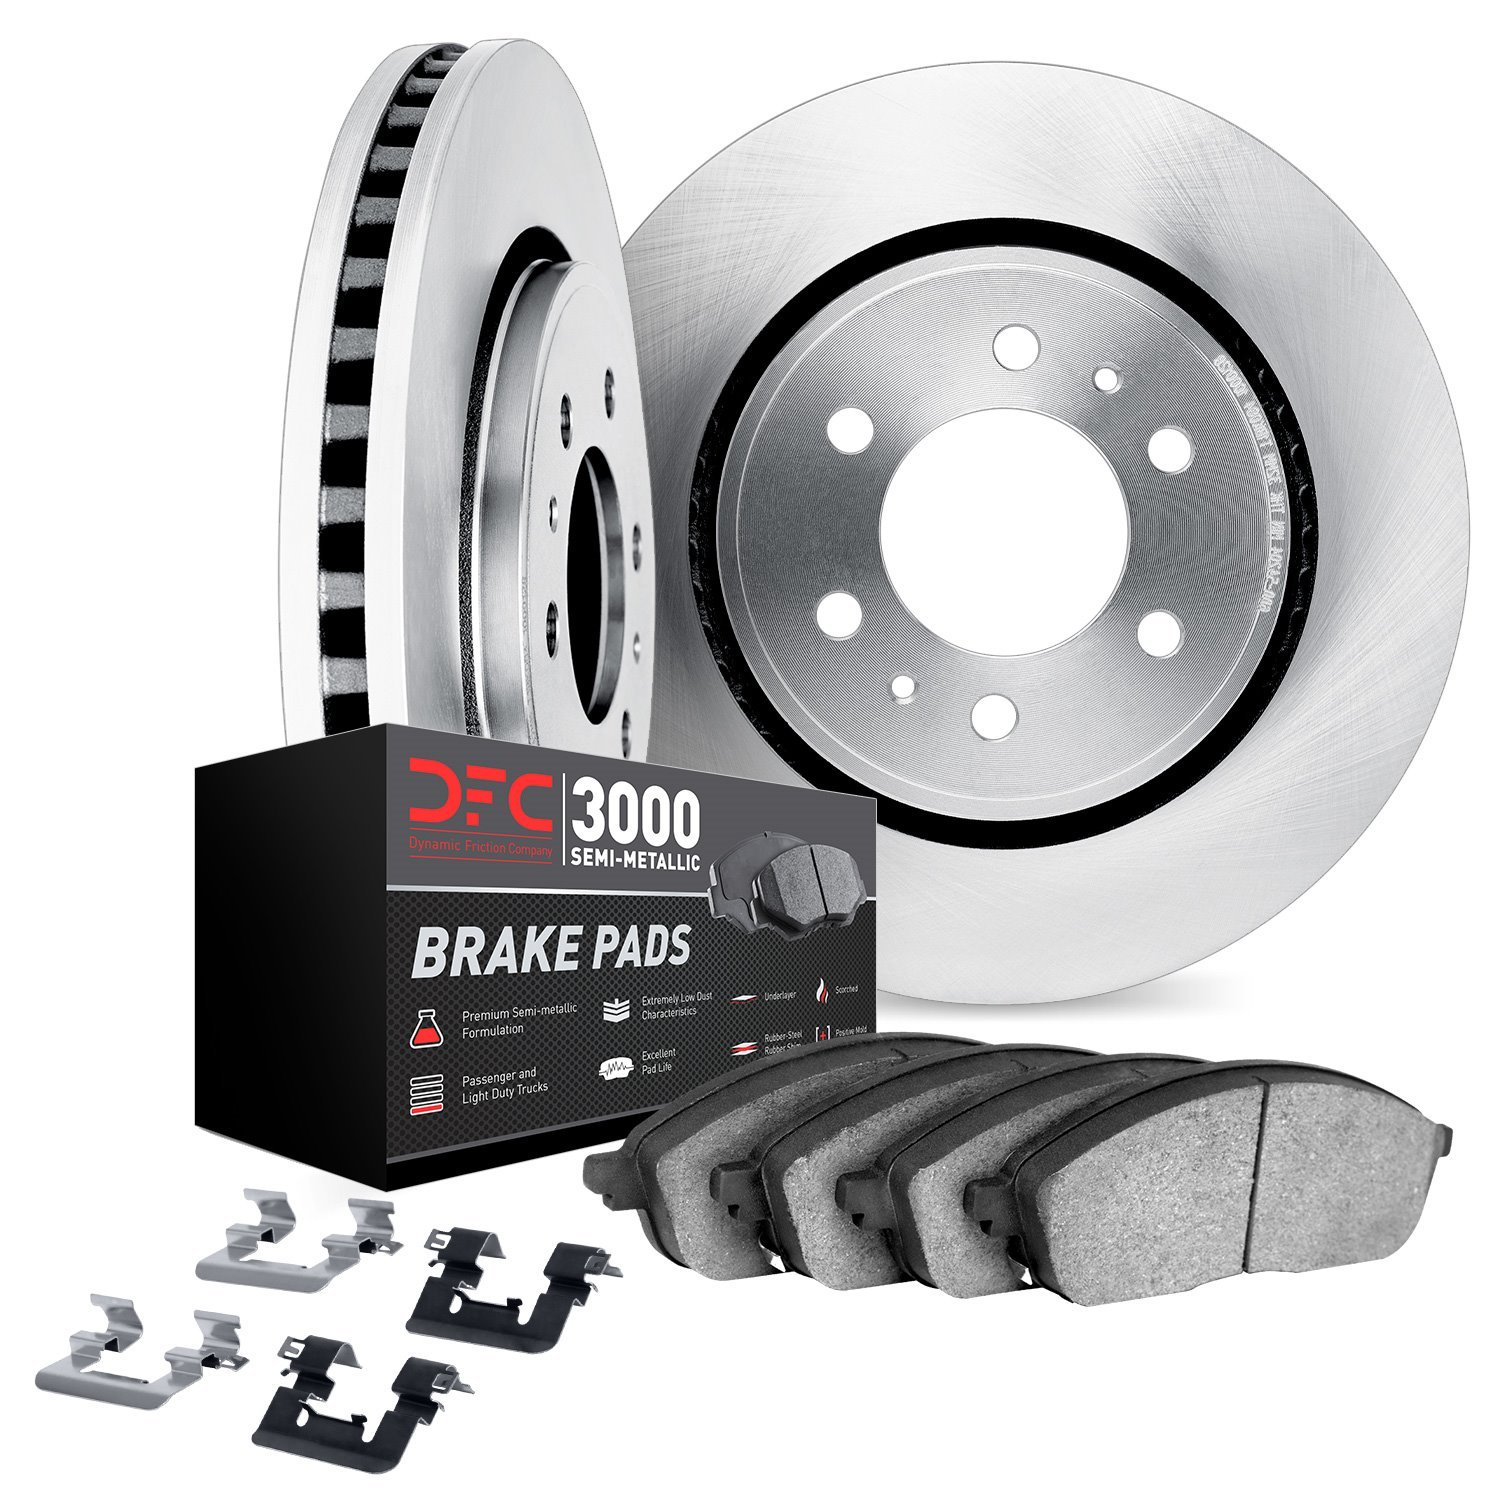 5112-67119 Slotted Brake Rotors with 3000-Series Semi-Metallic Brake Pads Kit & Hardware [Silver], Fits Select Infiniti/Nissan,